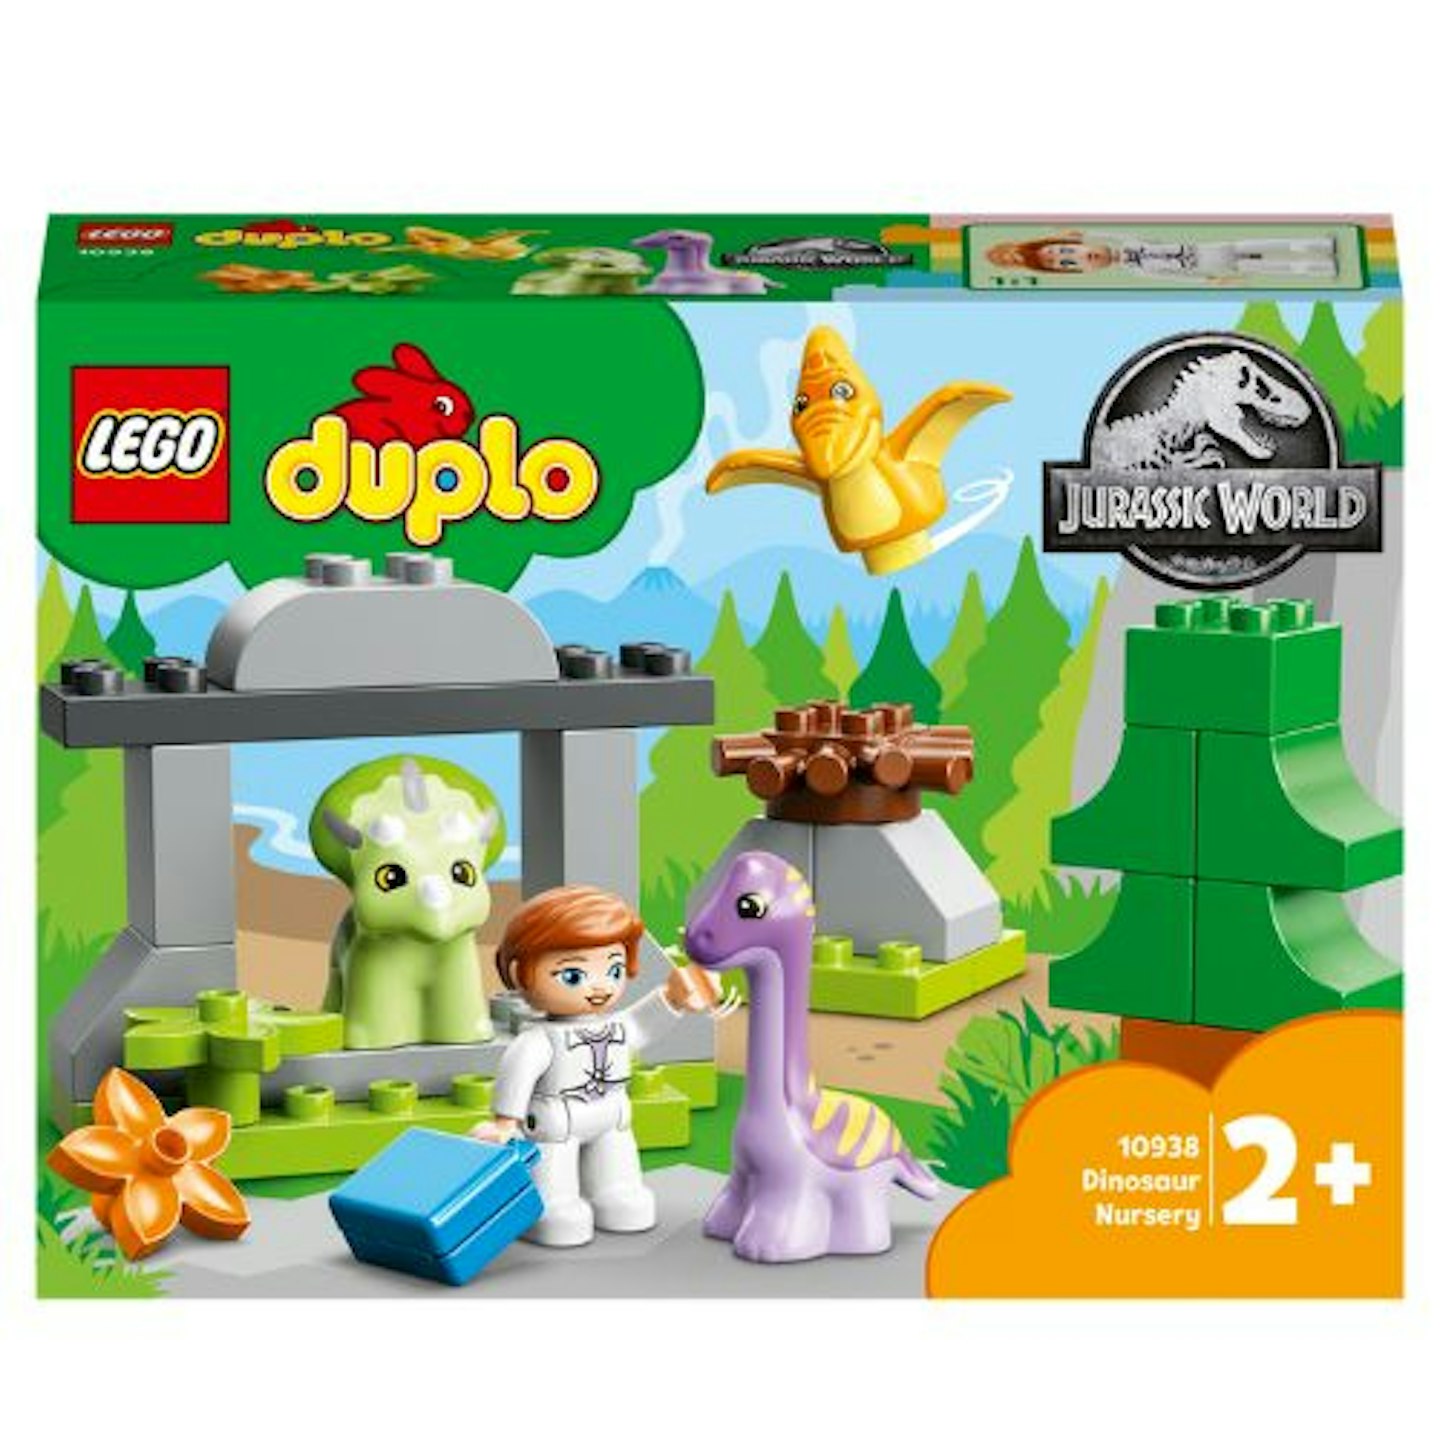 LEGO DUPLO Jurassic World Dinosaur Nursery Toy